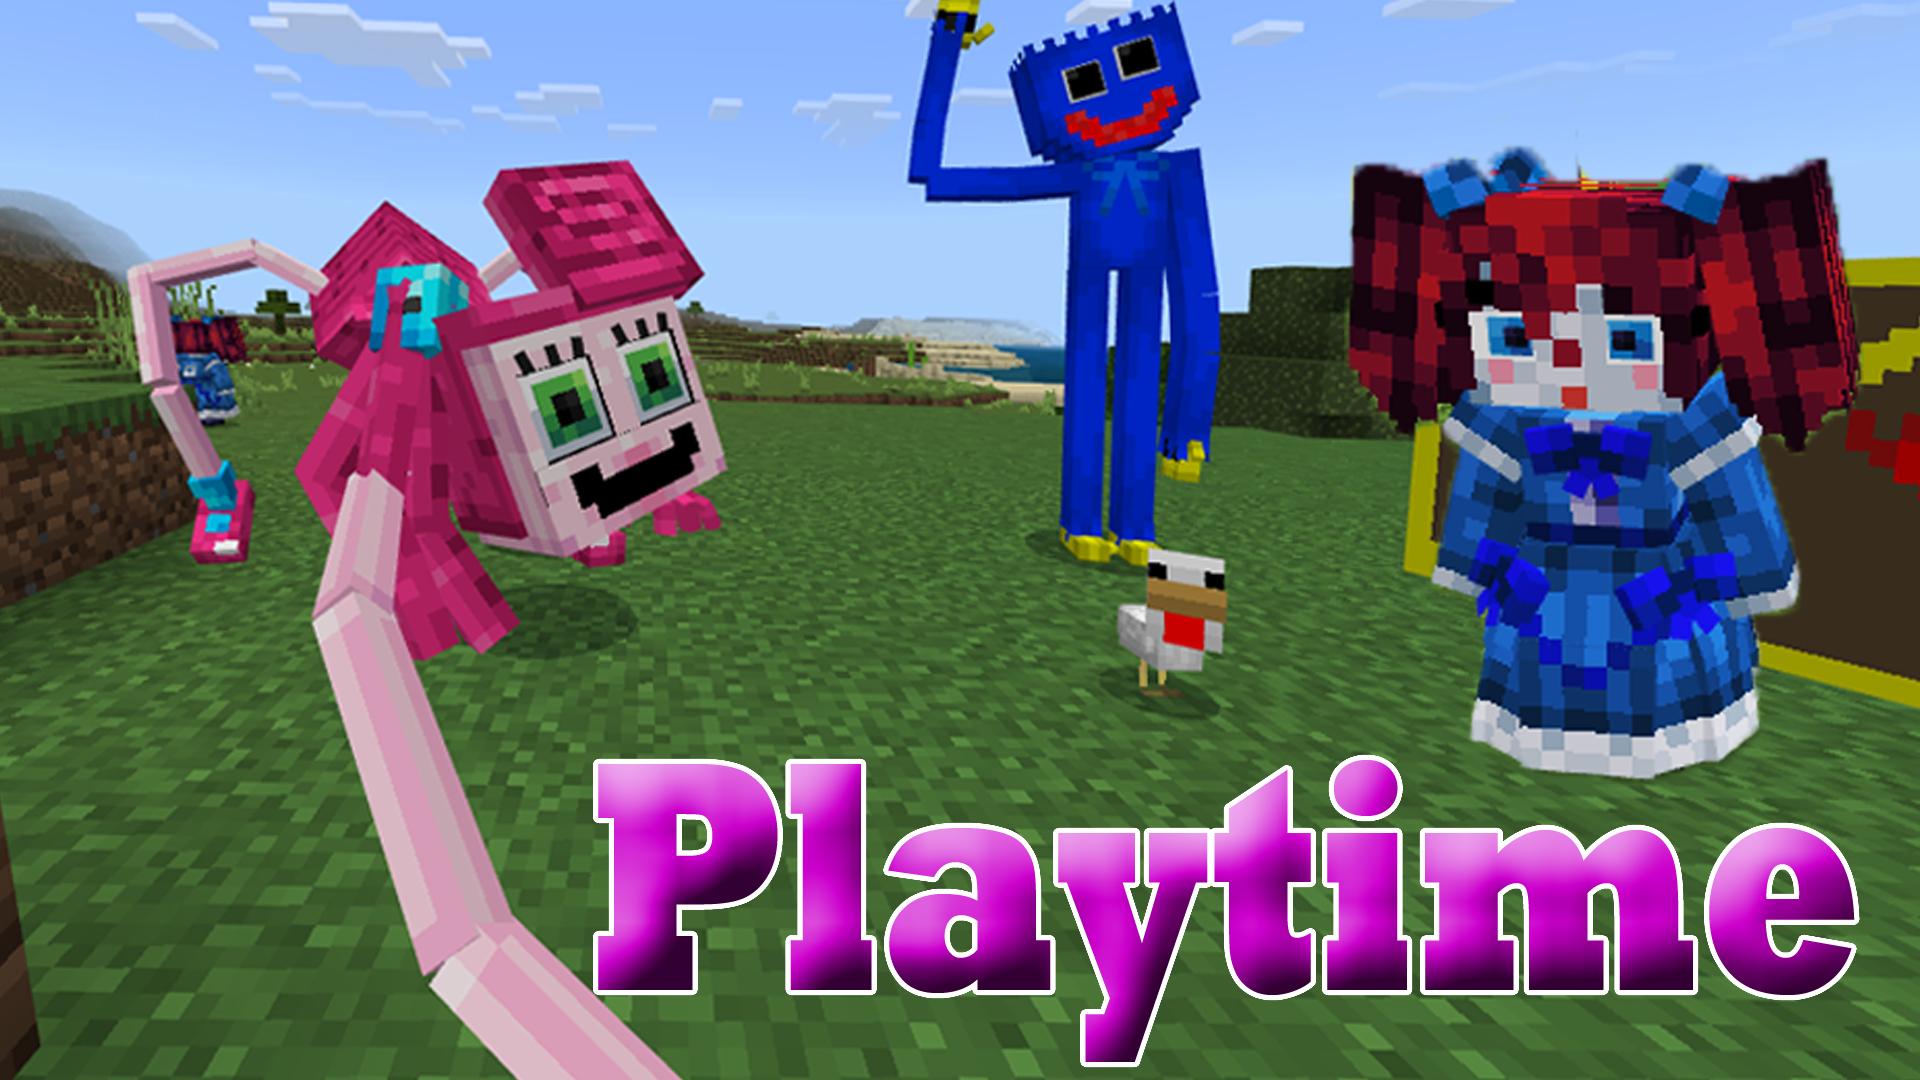 Poppy Minecraft. Майнкрафт скин Poppy Playtime 3. Человечек из Poppy Playtime в Minecraft. Poppy Playtime Mod Minecraft pe by Bbendy. Карта poppy playtime 3 в minecraft